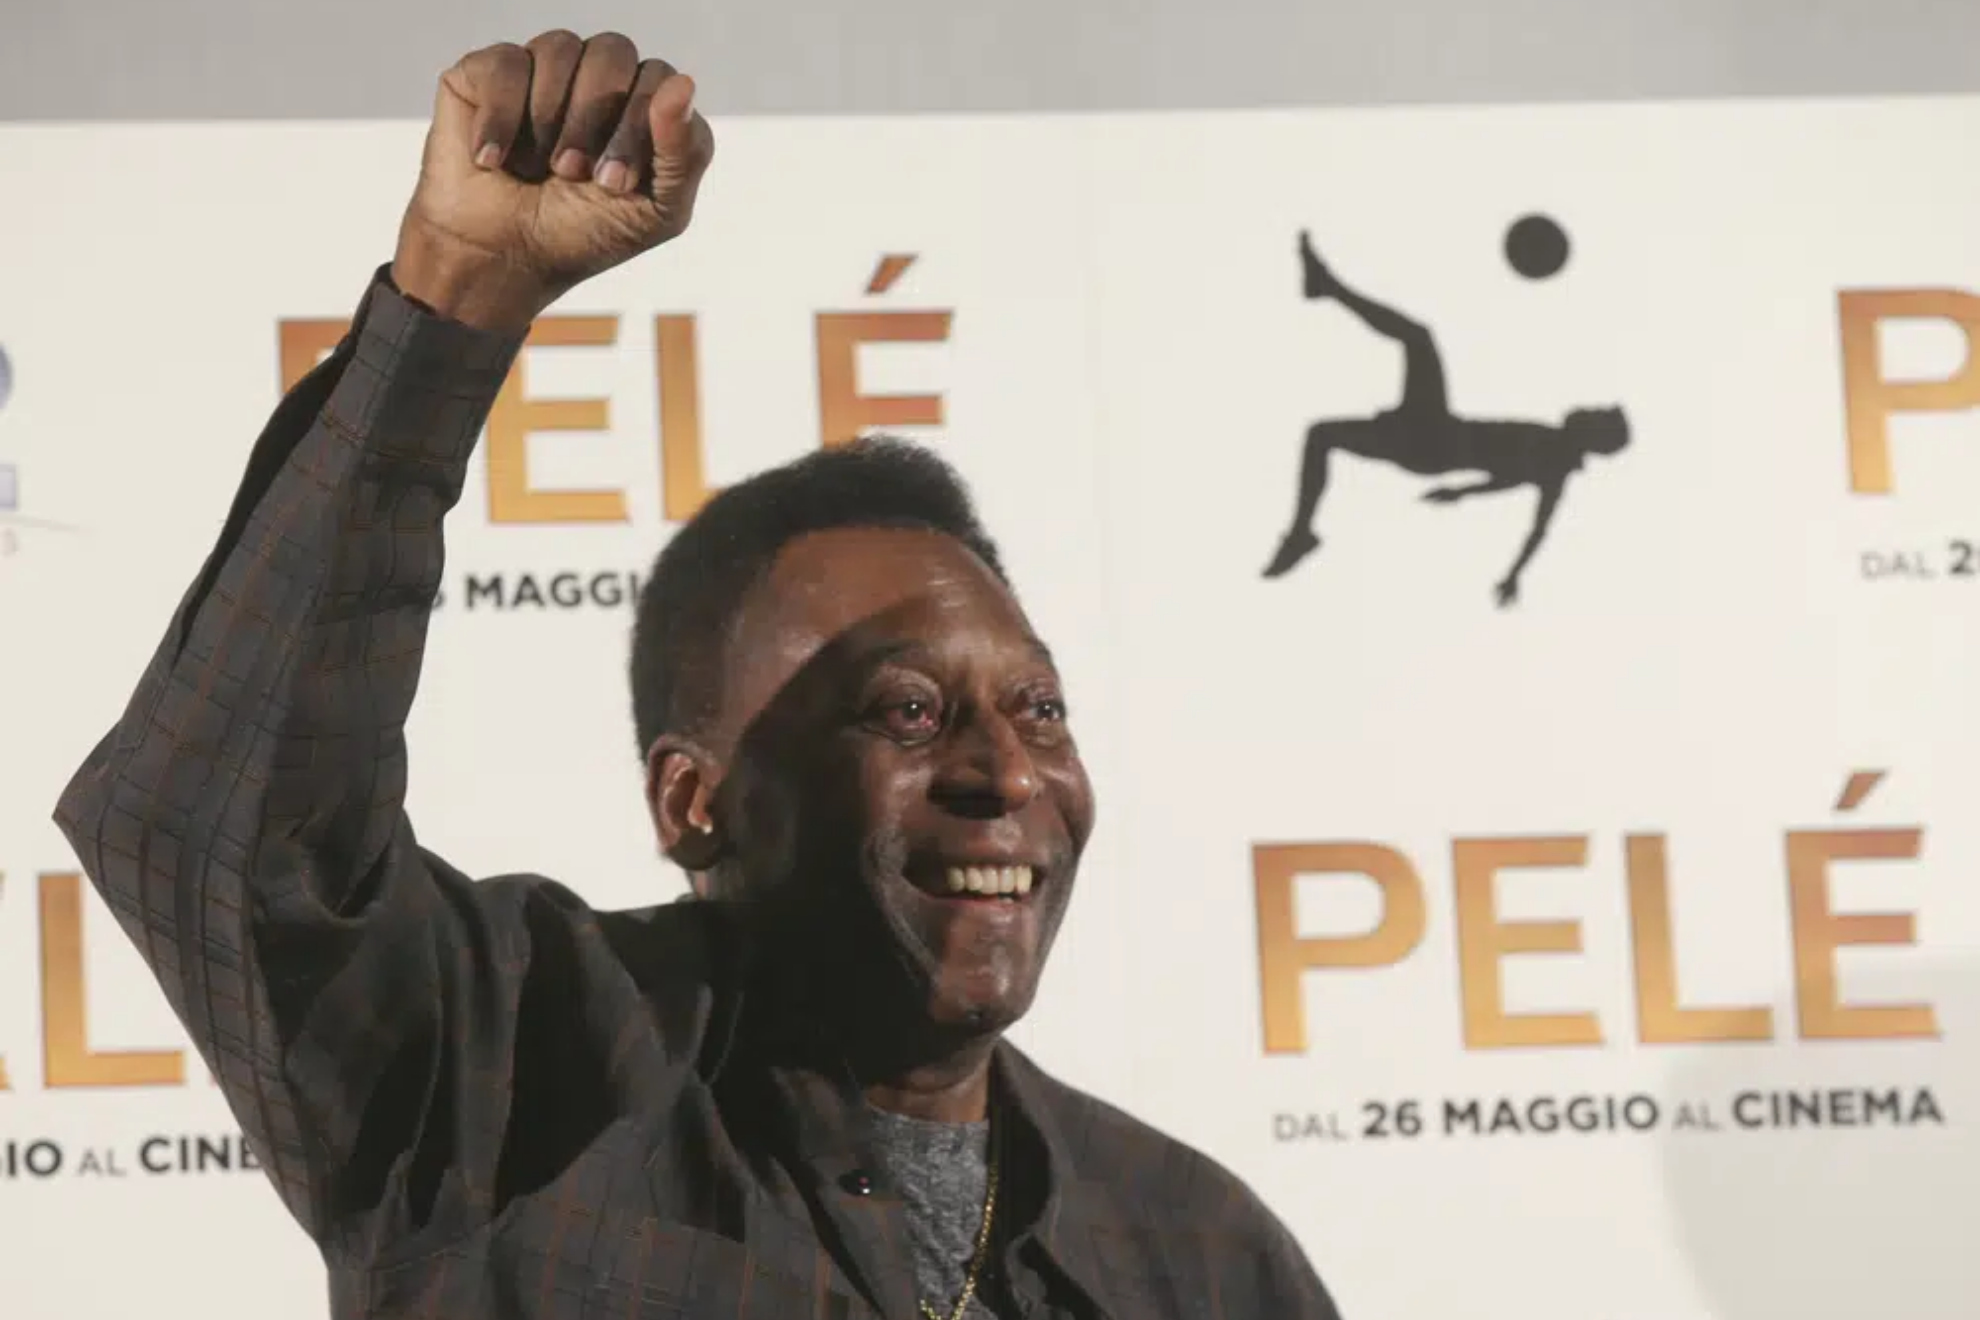 Pele was a celebrity that transcended soccer.